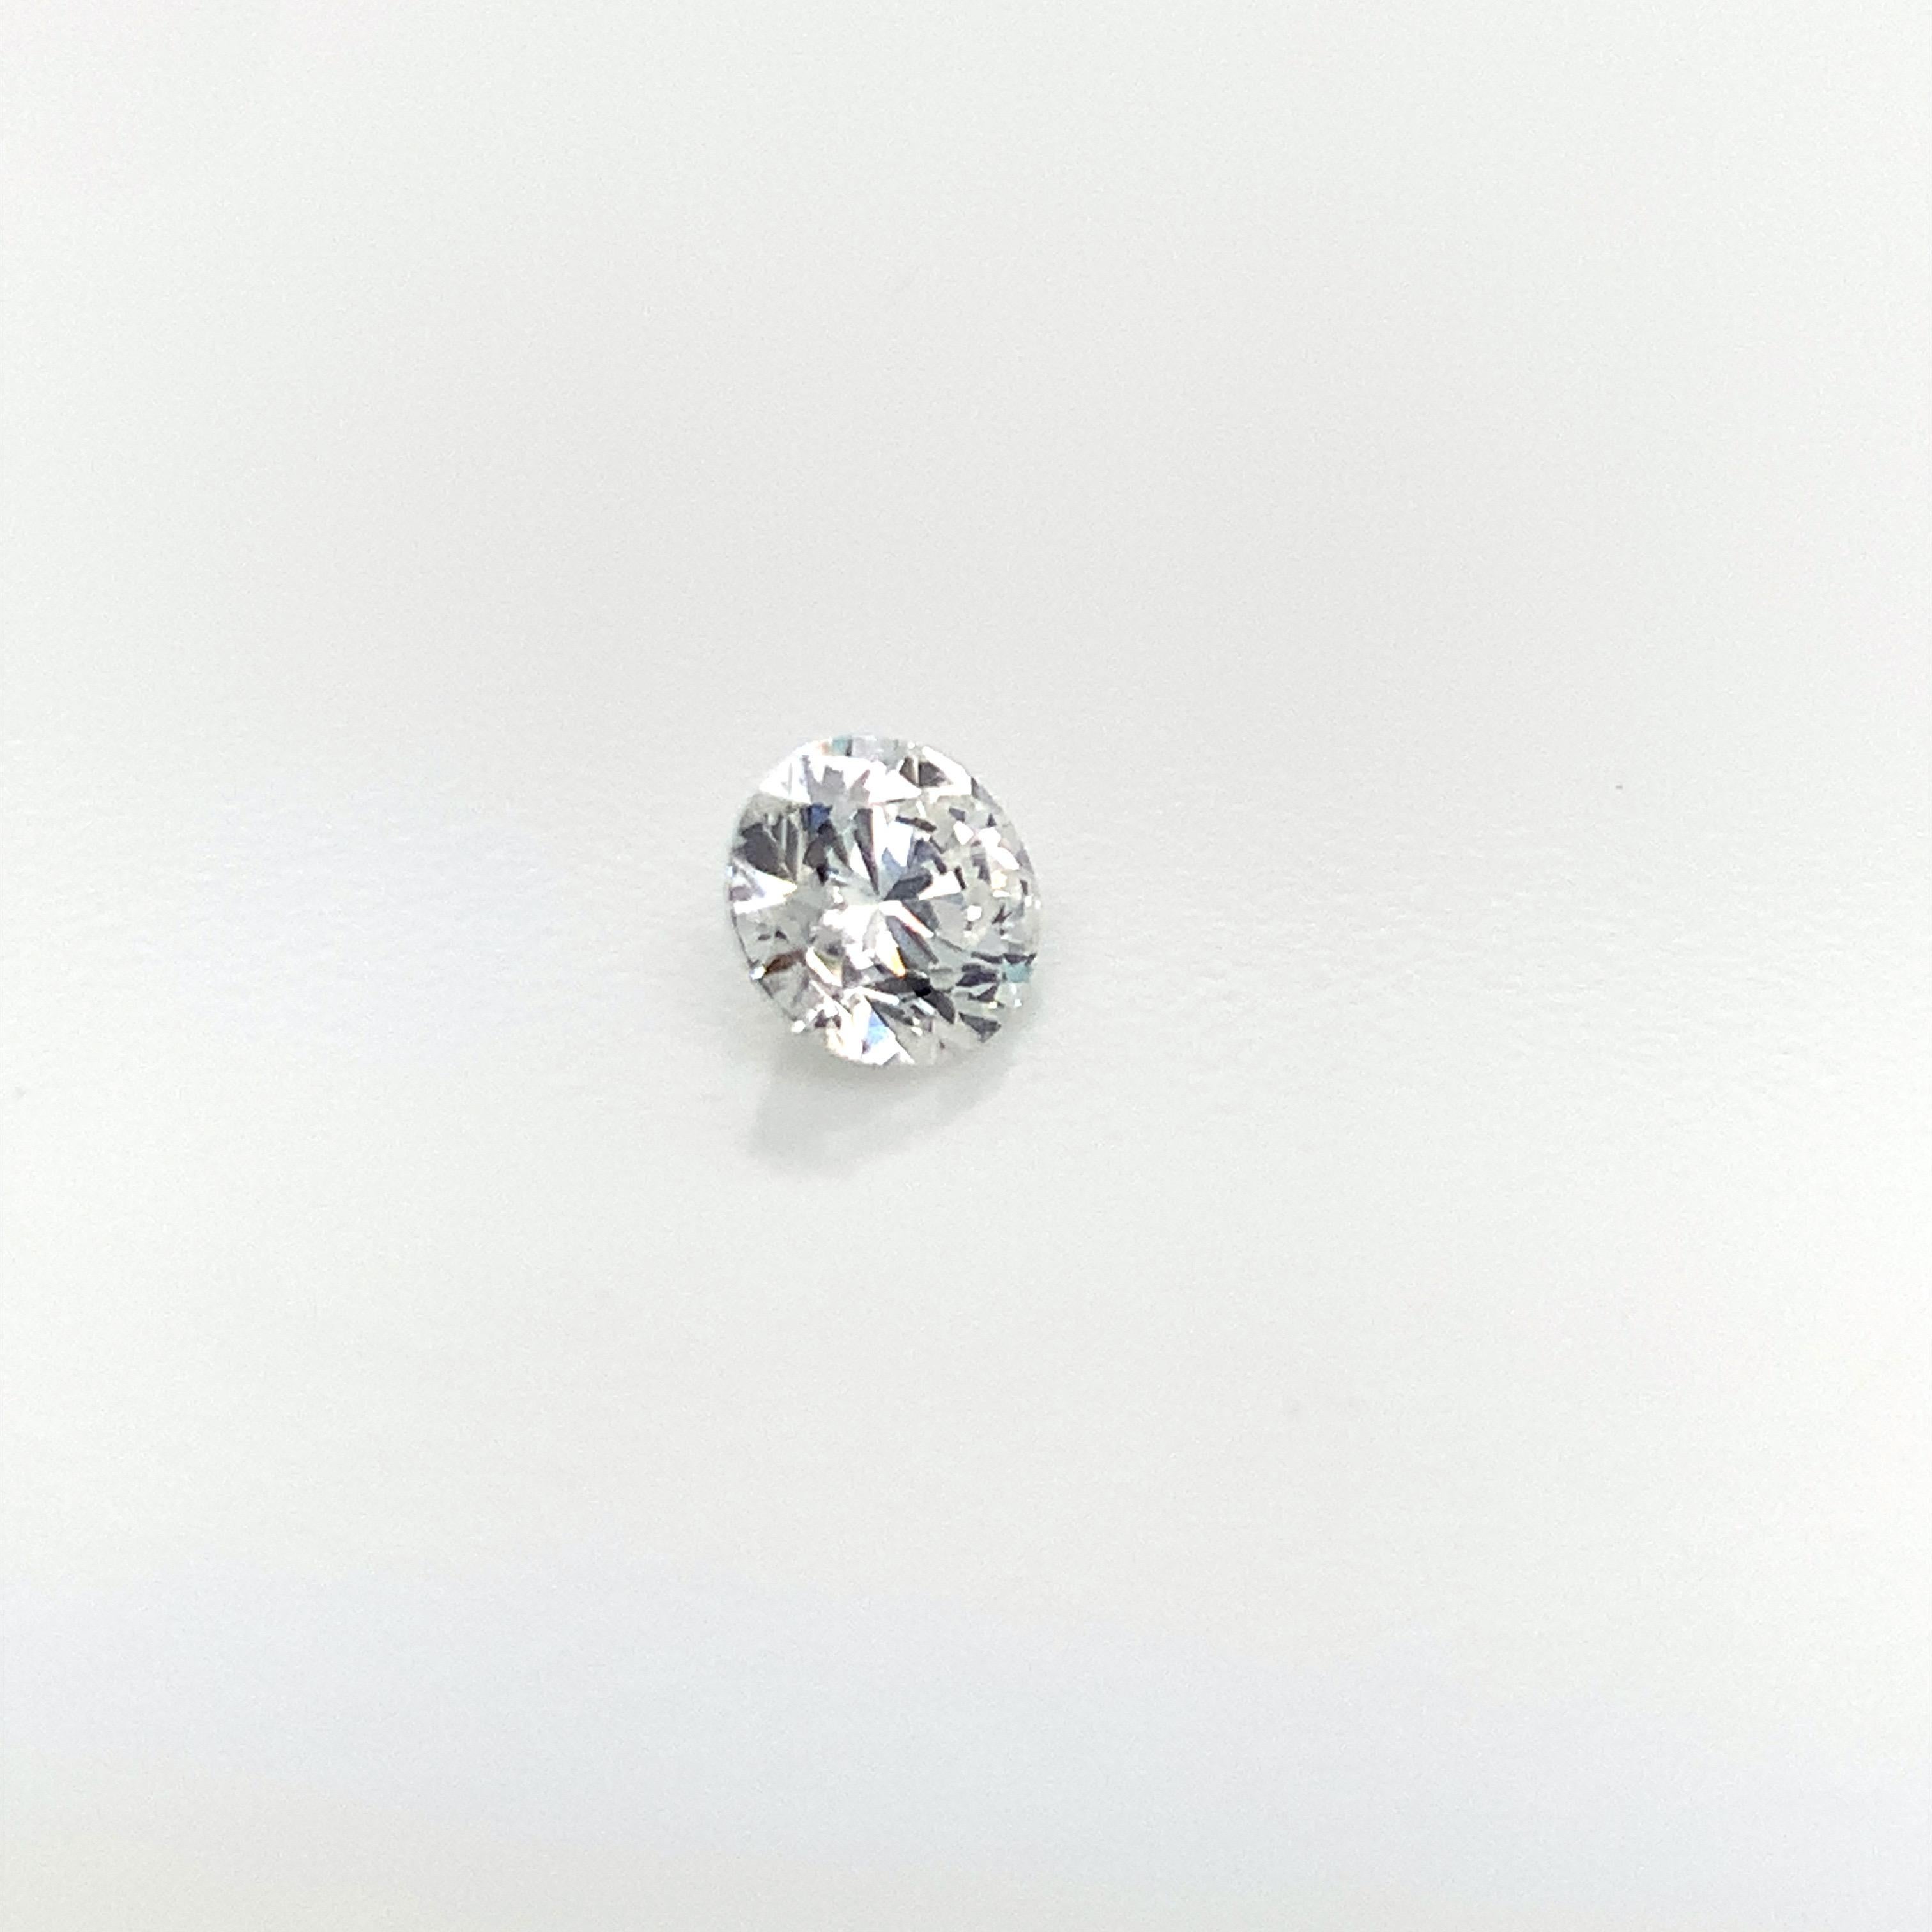 Women's or Men's GIA Certified 0.61 Carat Round Brilliant Diamond For Sale